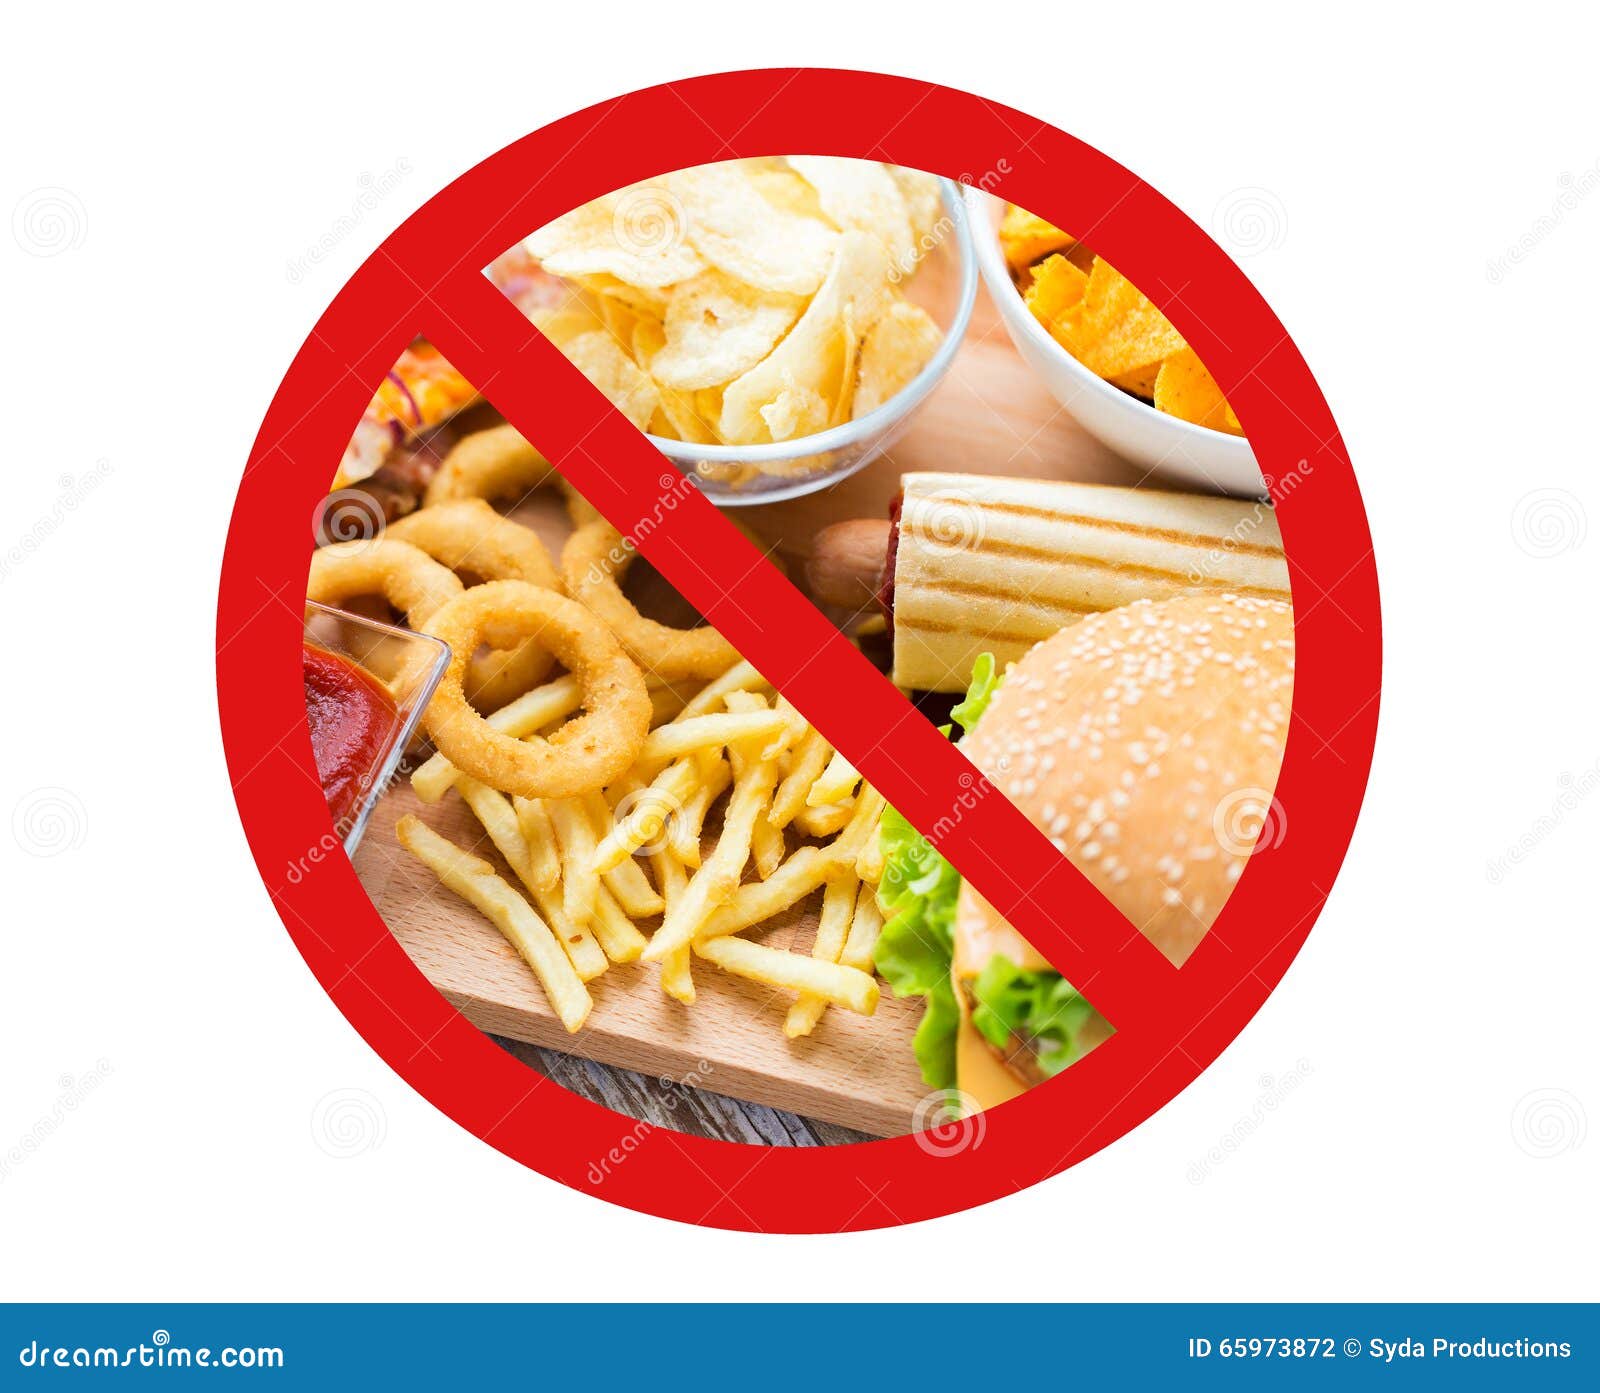 Close Up Of Fast Food Snacks Behind No Symbol Stock Photo 